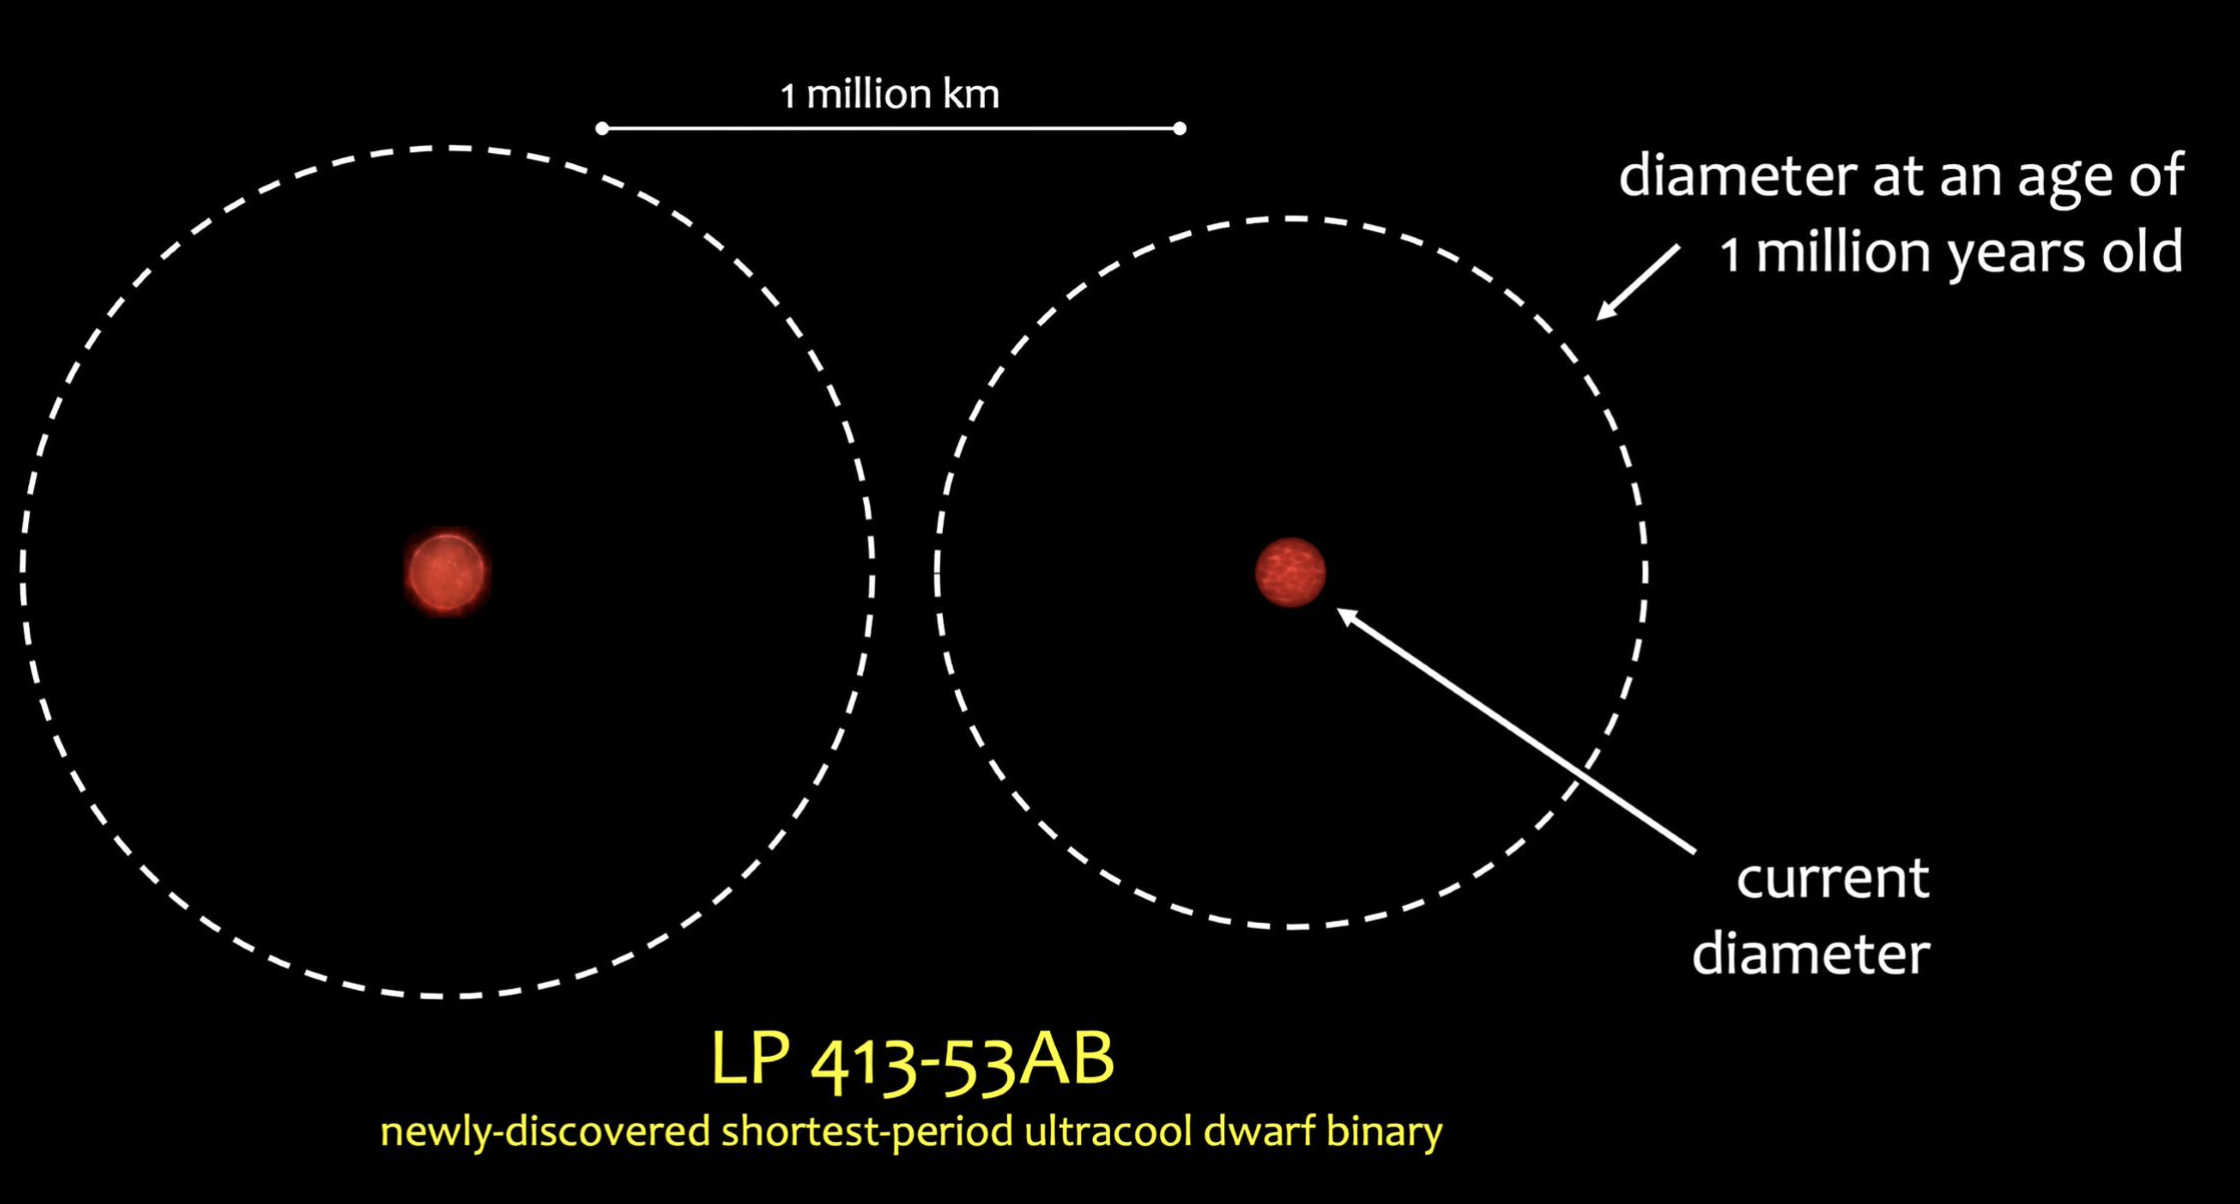 Ultracool dwarf binary stars break records